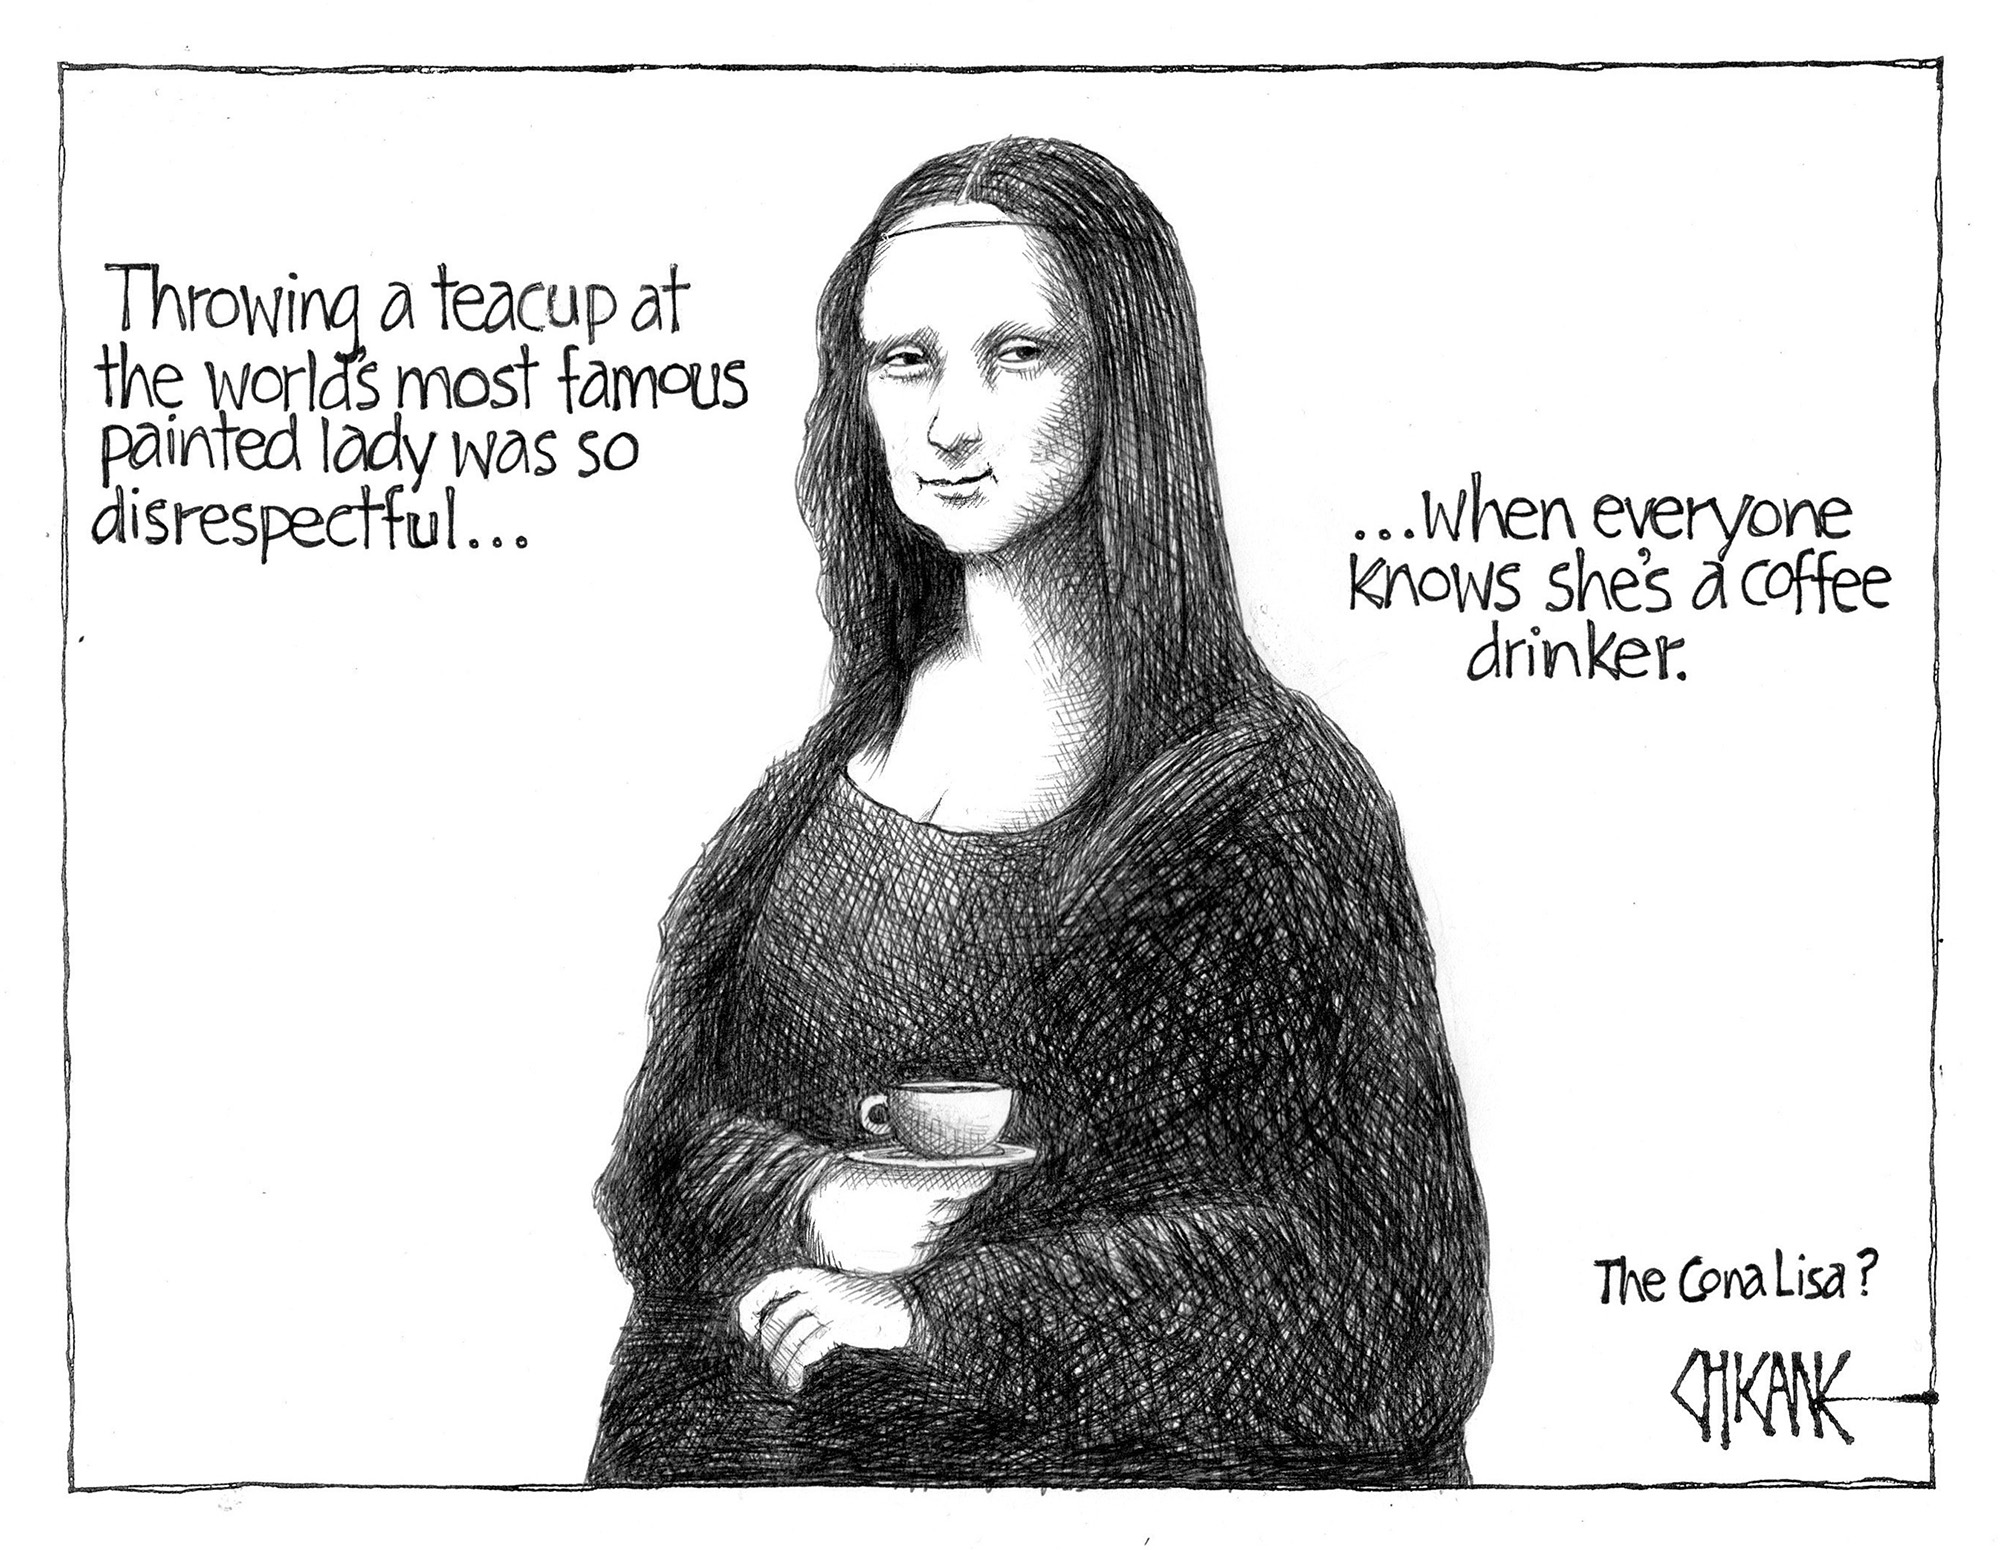 Mona Lisa coffee cartoon by Chicane